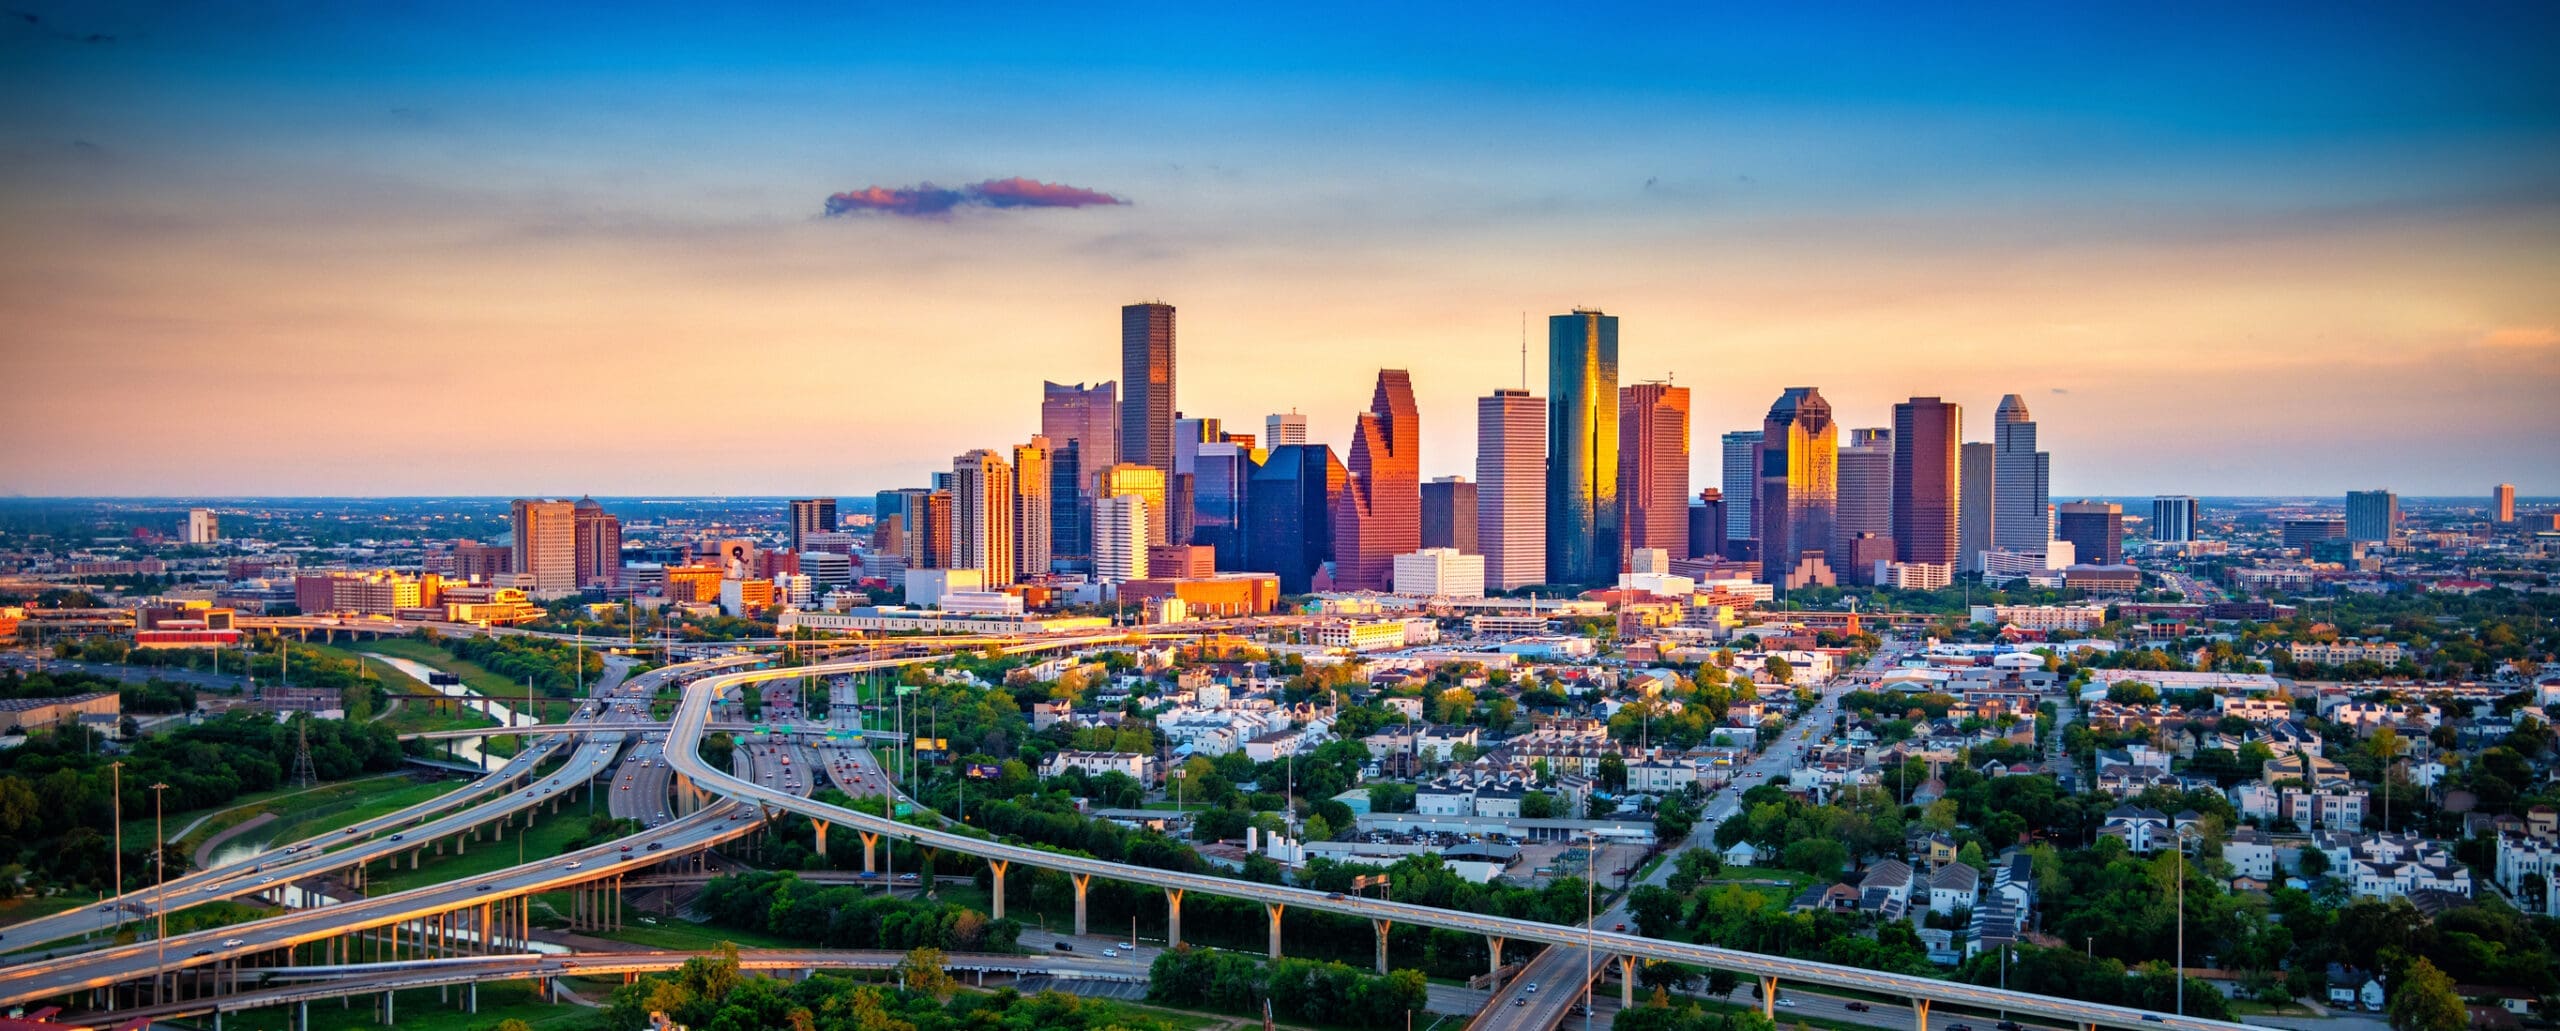 Houston, Texas with the skyline beyond